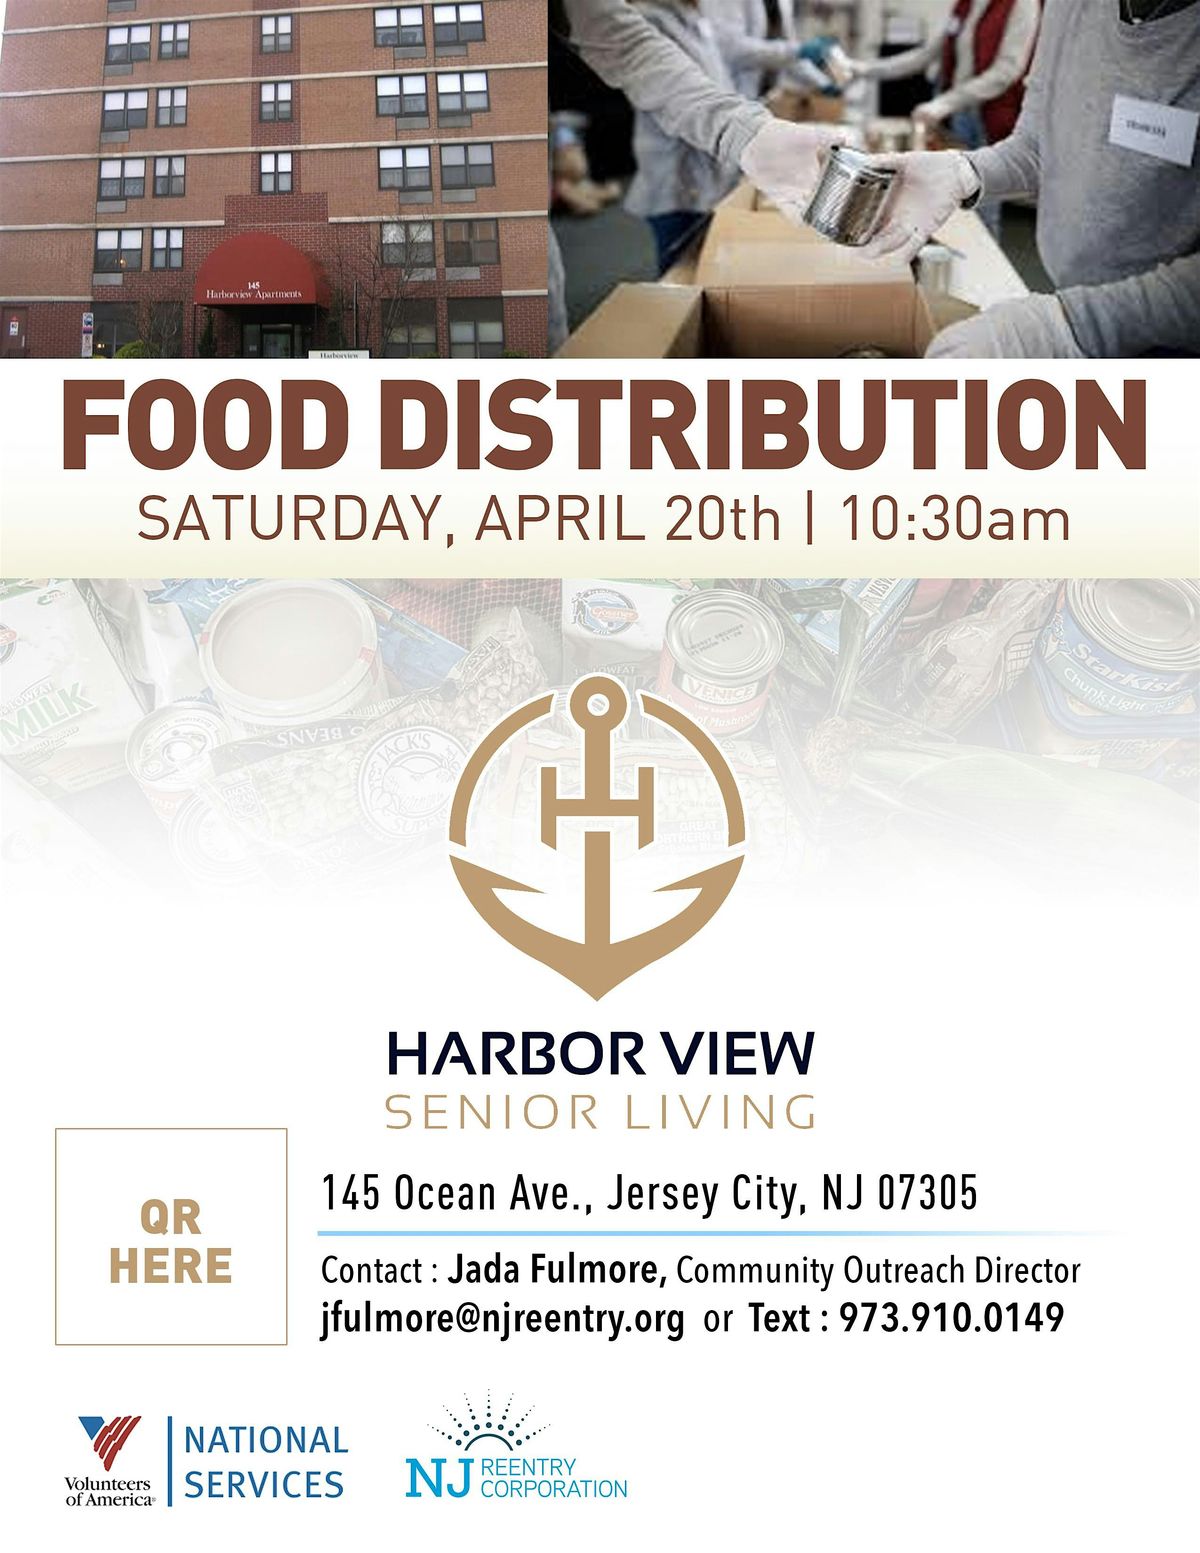 Food Distribution at Harbor Views Senior Living Apartments